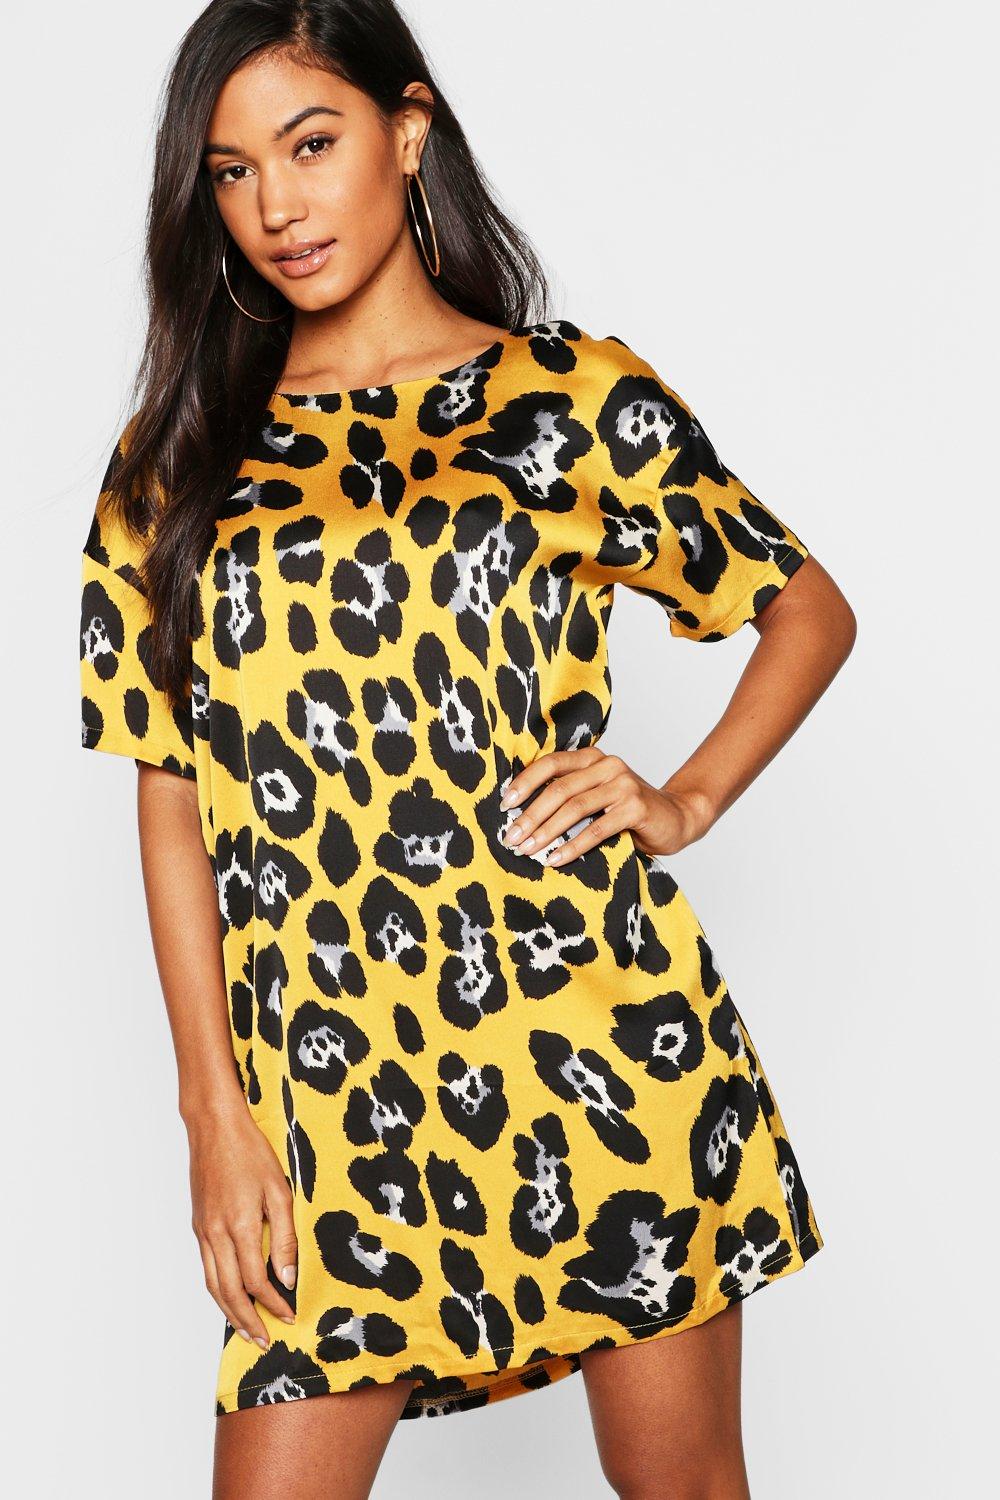 mustard animal print dress